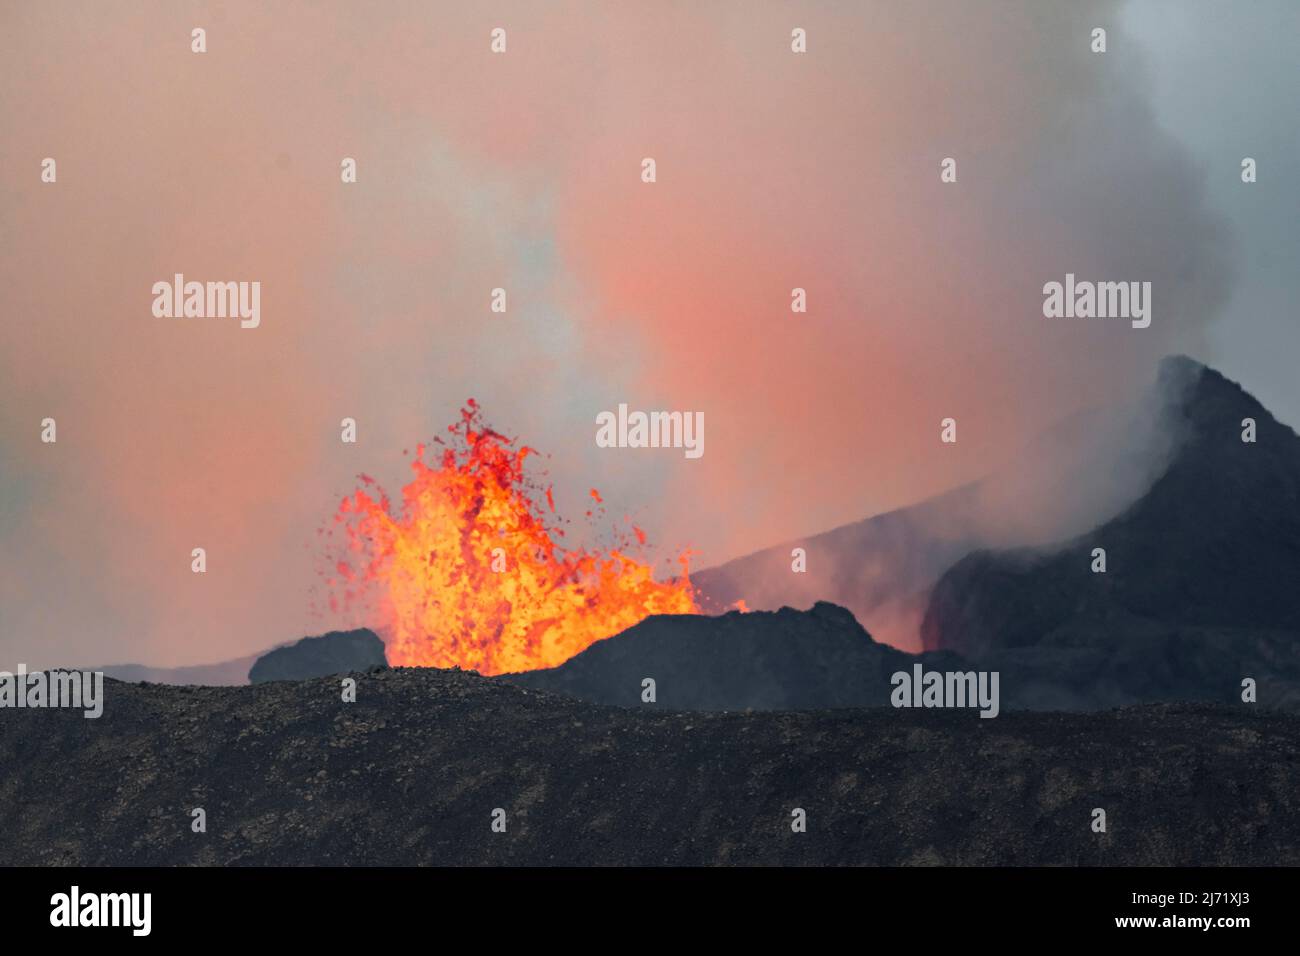 Rauchender aktiver Vulkankrater, Gluehende Lava spritzt ueber den Kraterrand, Vulkanausbruch, aktiver Tafelvulkan Fagradalsfjall Stock Photo